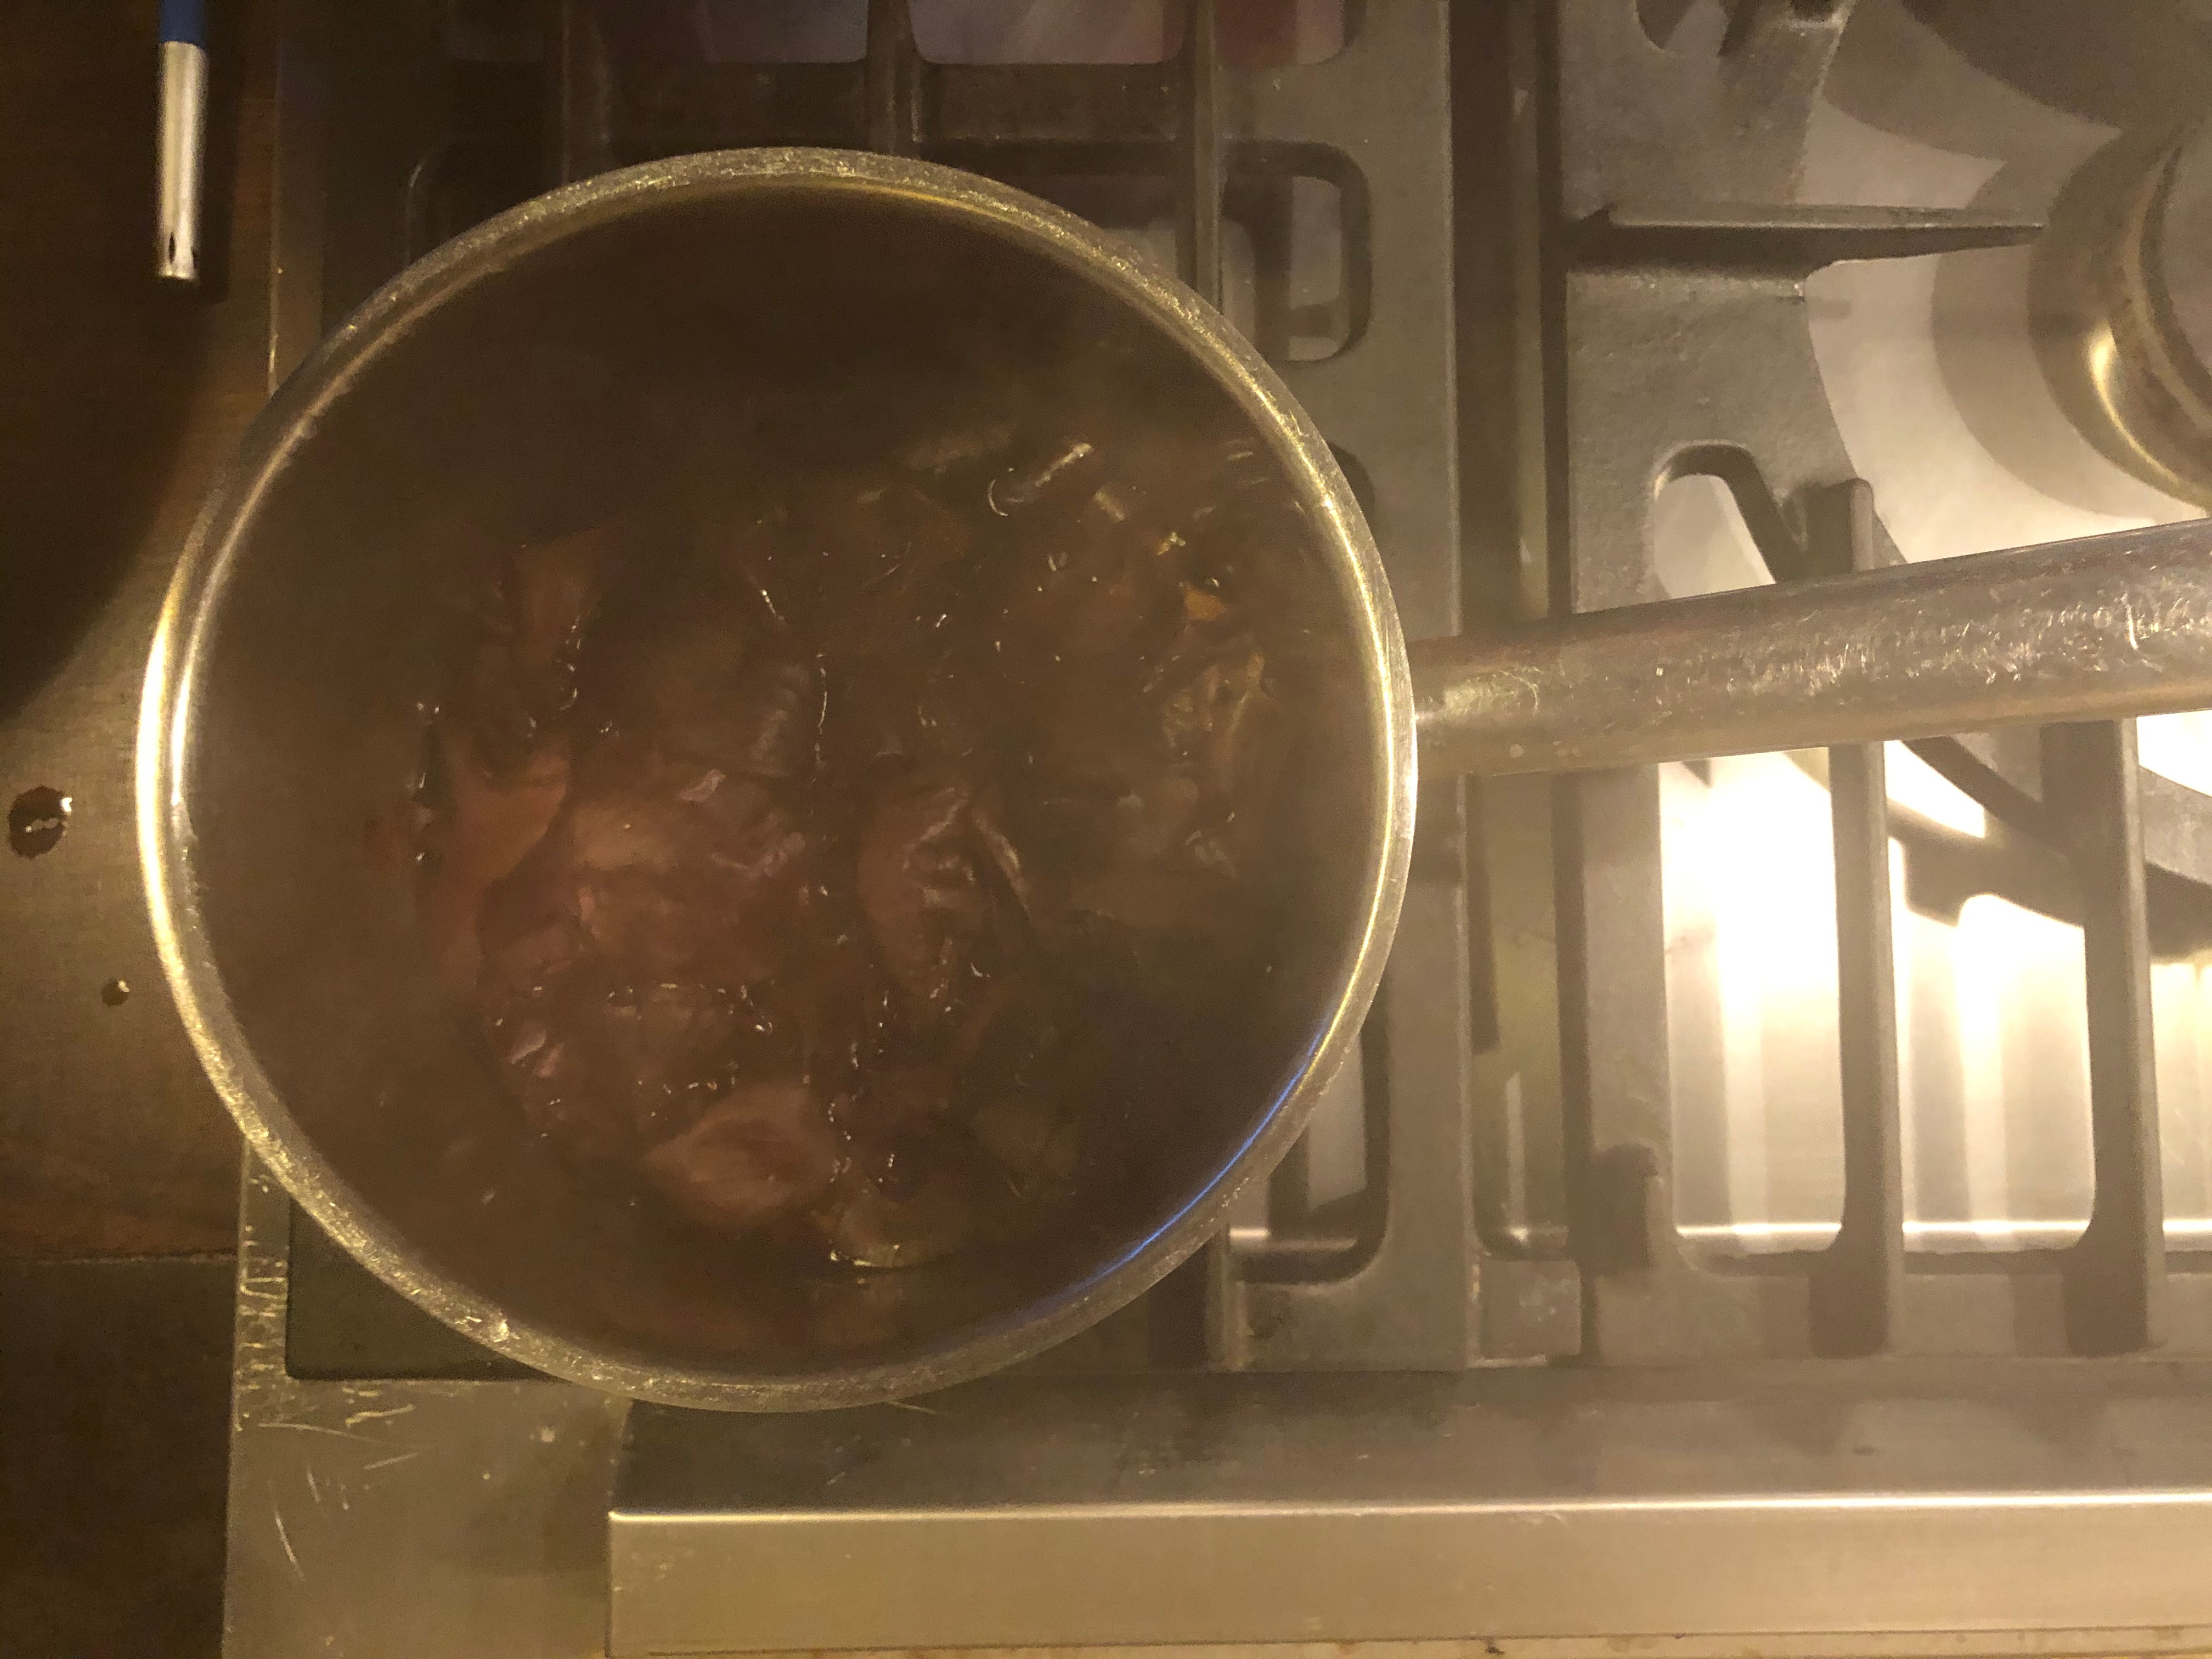 Onion skins simmering on hob